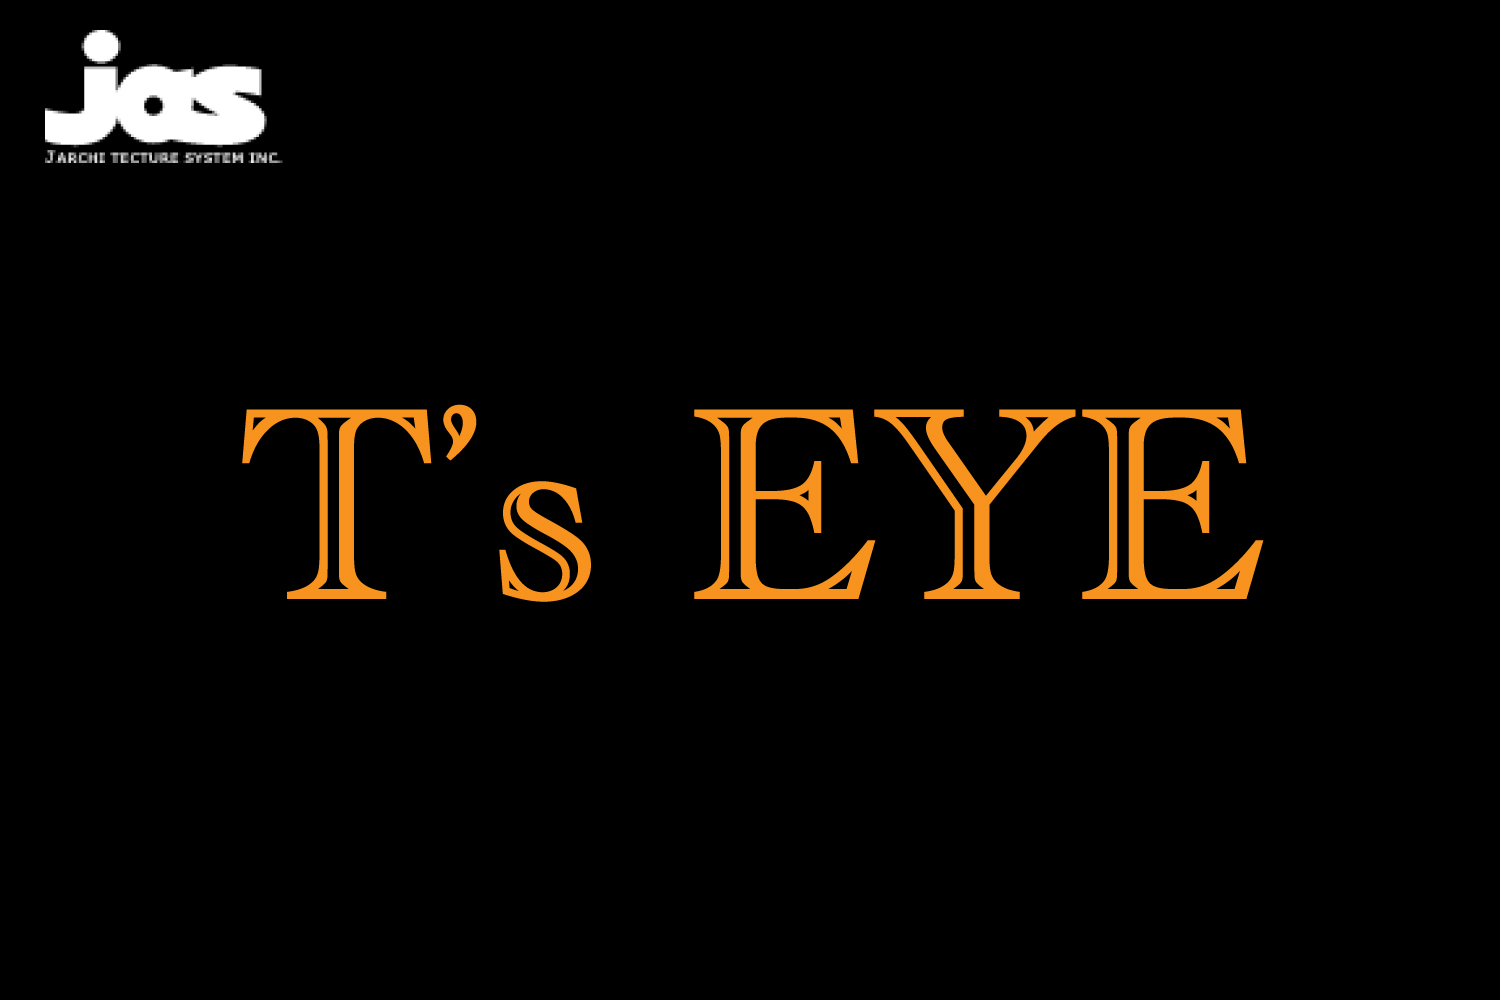 T’s eye　〜2022/6/27〜￼￼